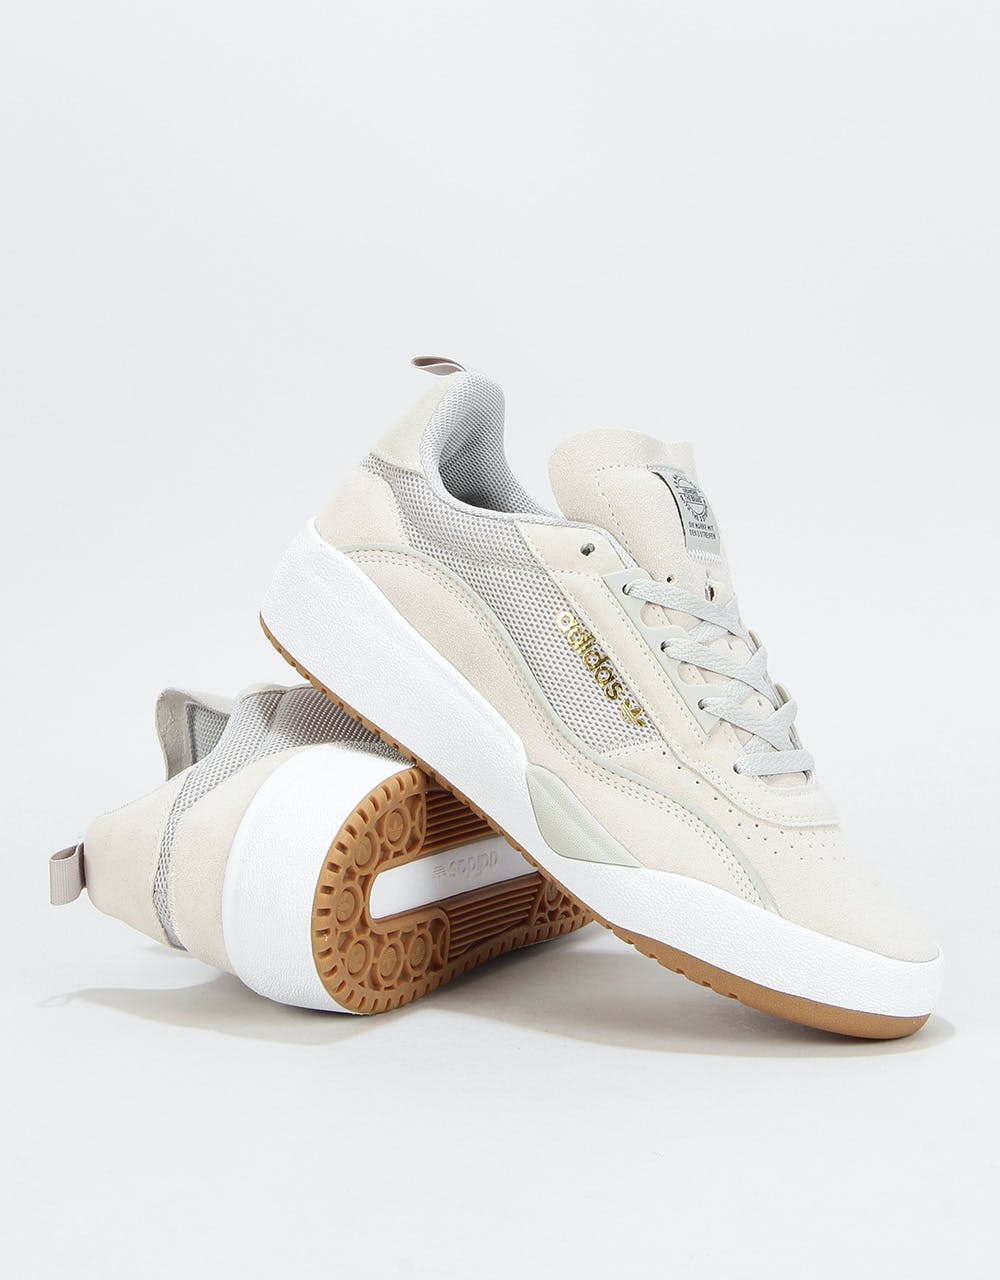 Adidas Liberty Cup Skate Shoes - White/Gum/Gold Metallic